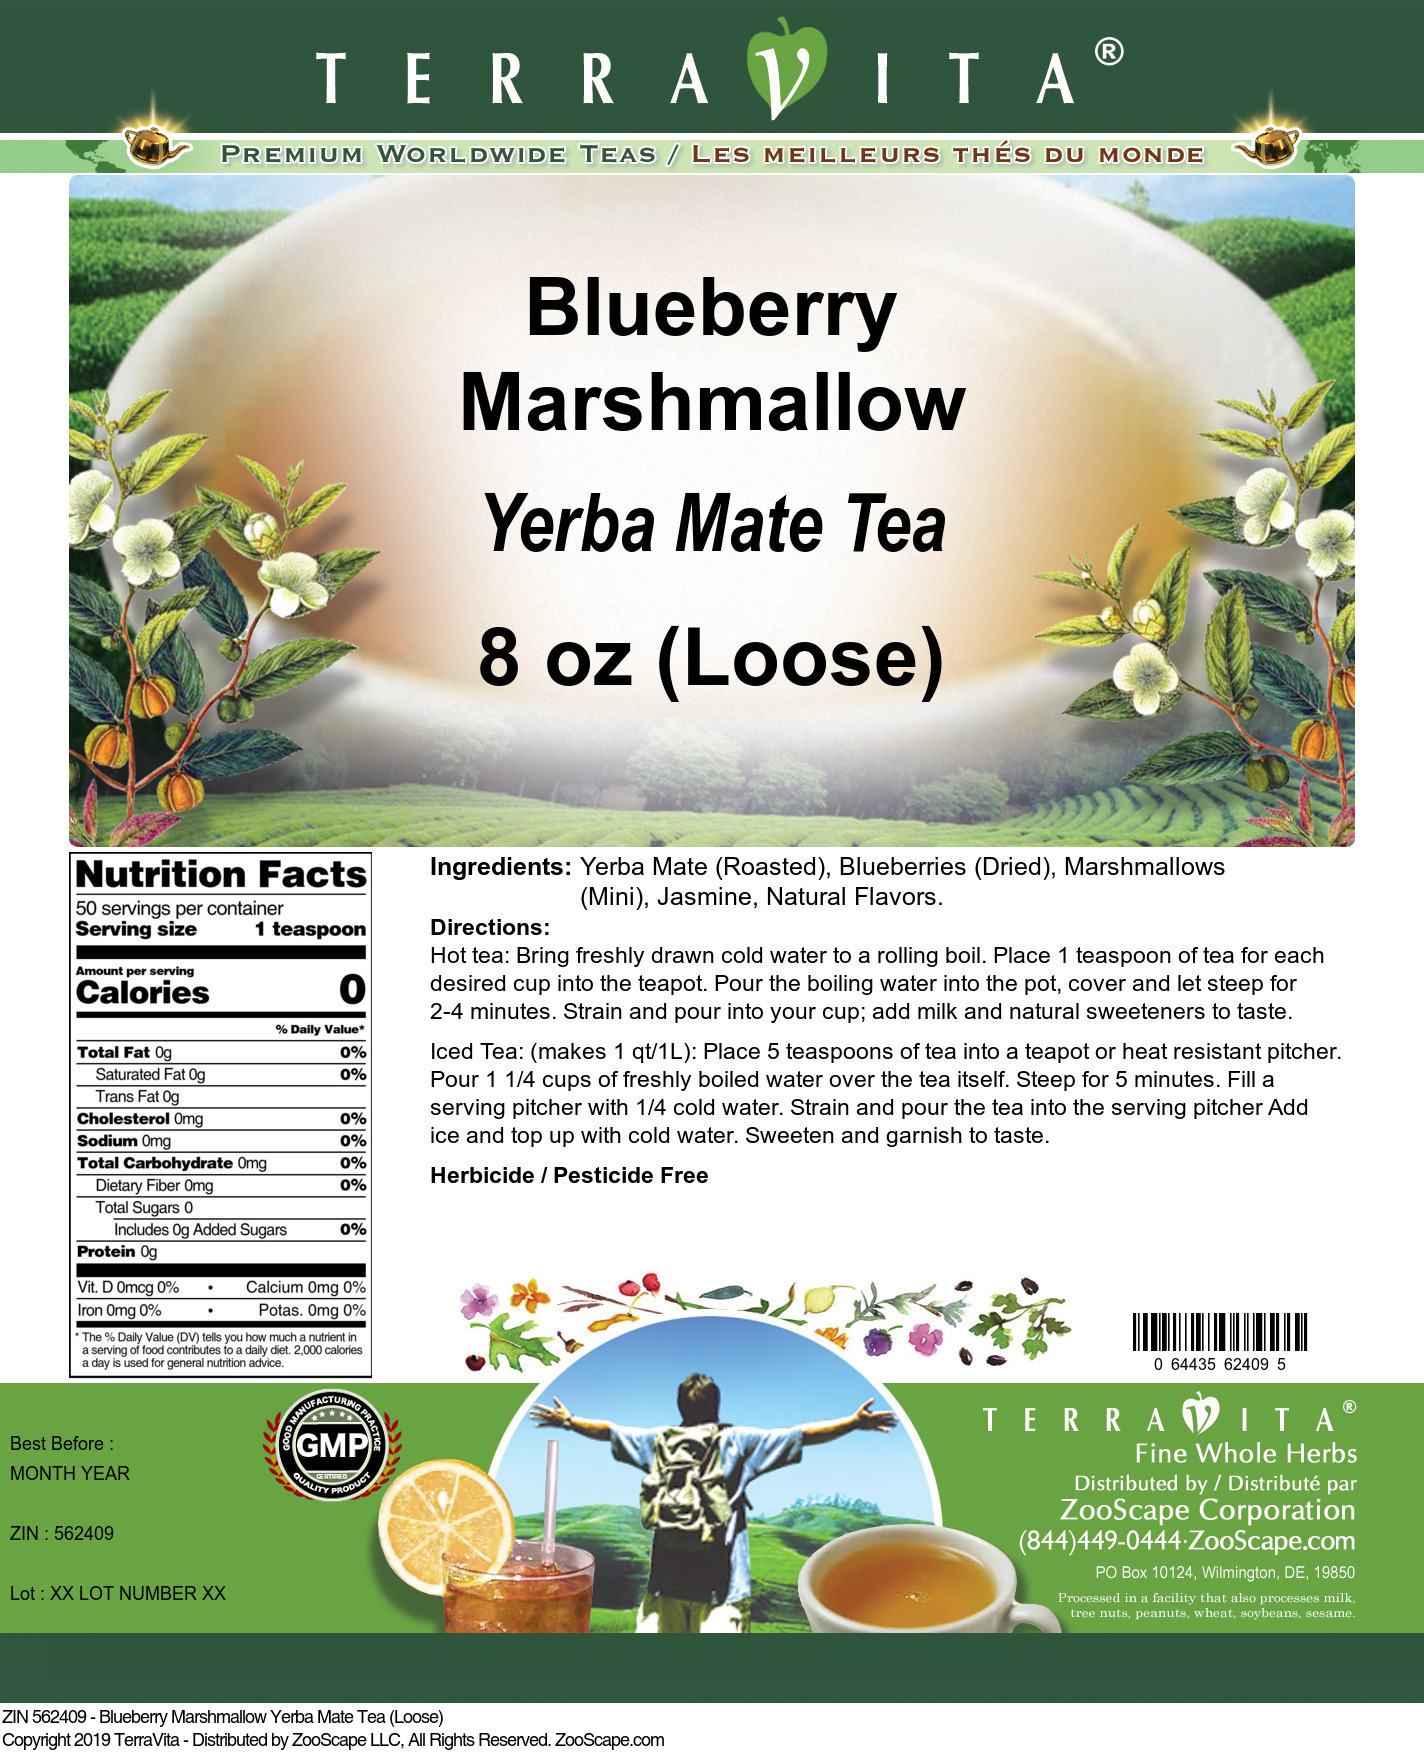 Blueberry Marshmallow Yerba Mate Tea (Loose) - Label